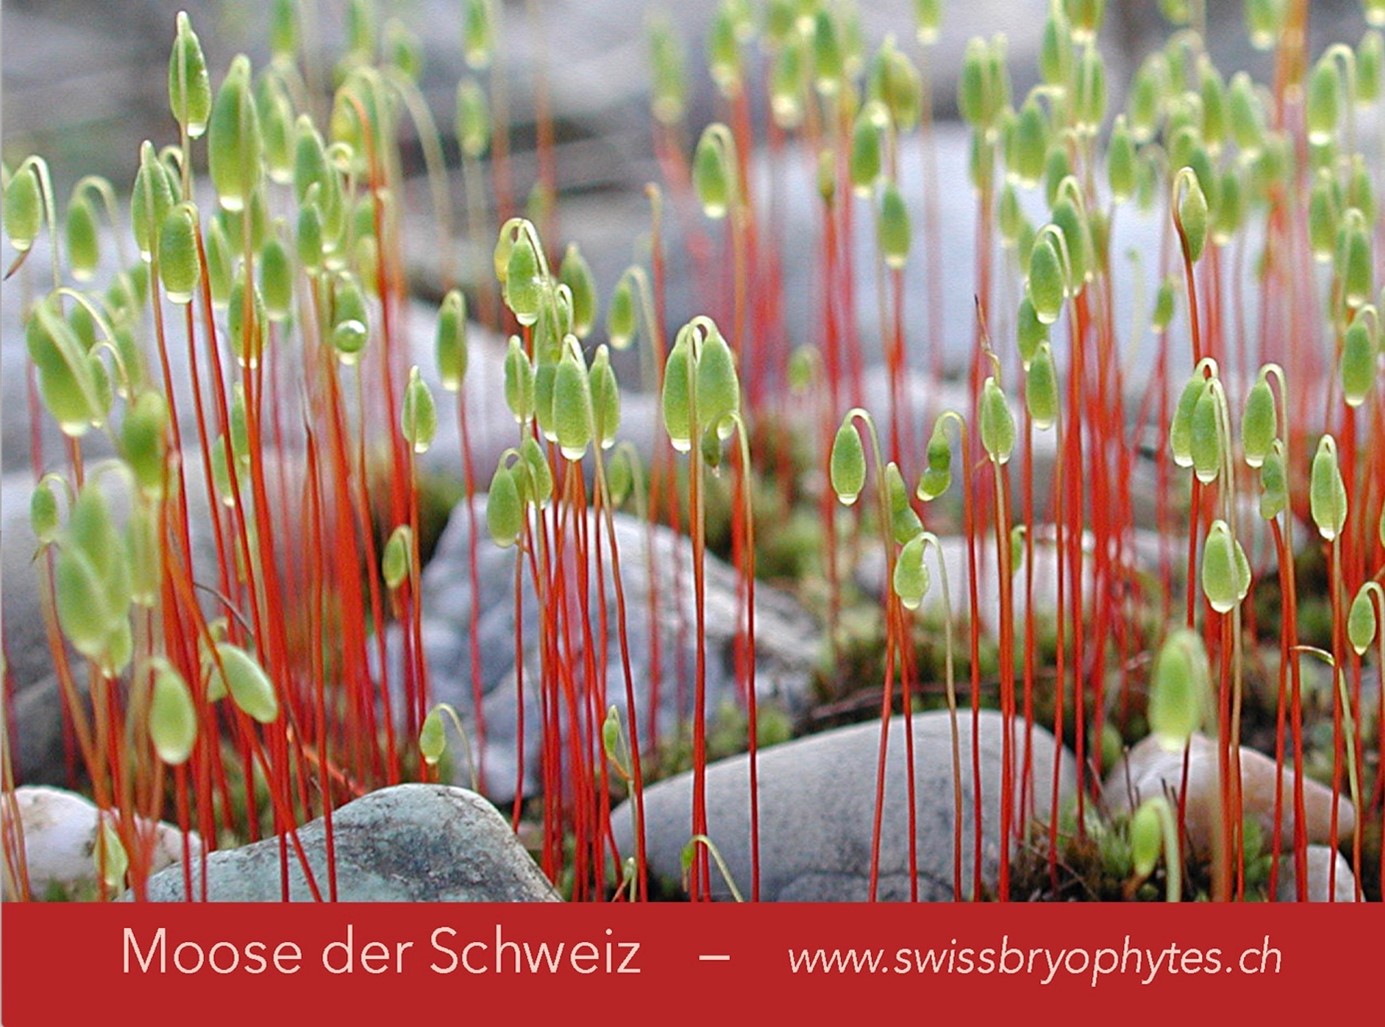 Swissbryophytes